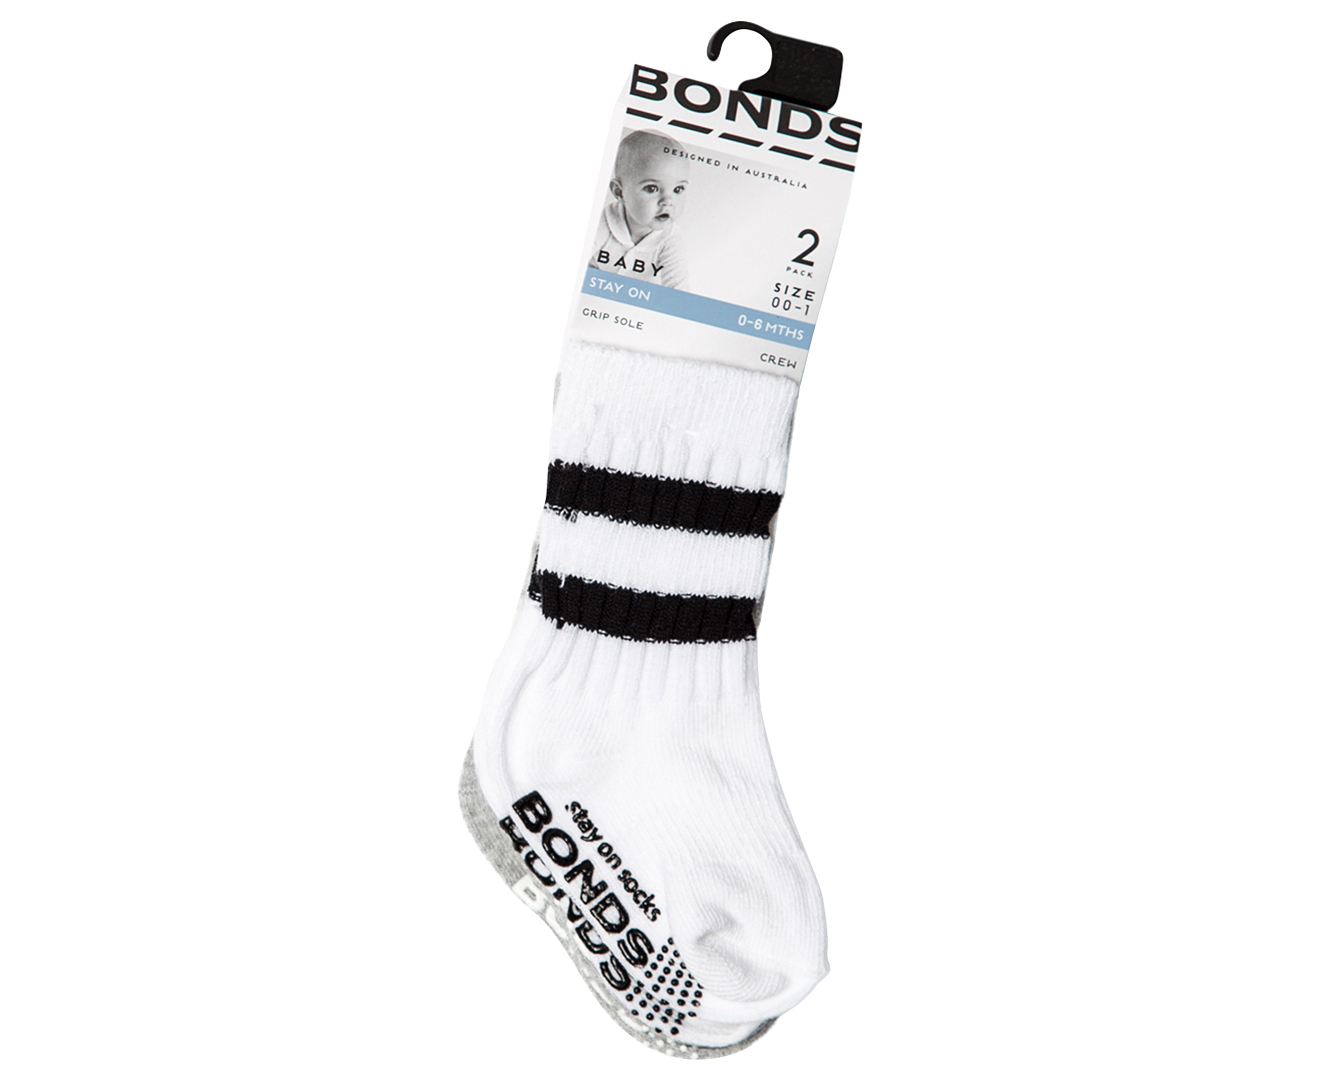 Bonds Baby Stay On Original Sock 2-Pack - White/Grey/Black | GroceryRun ...